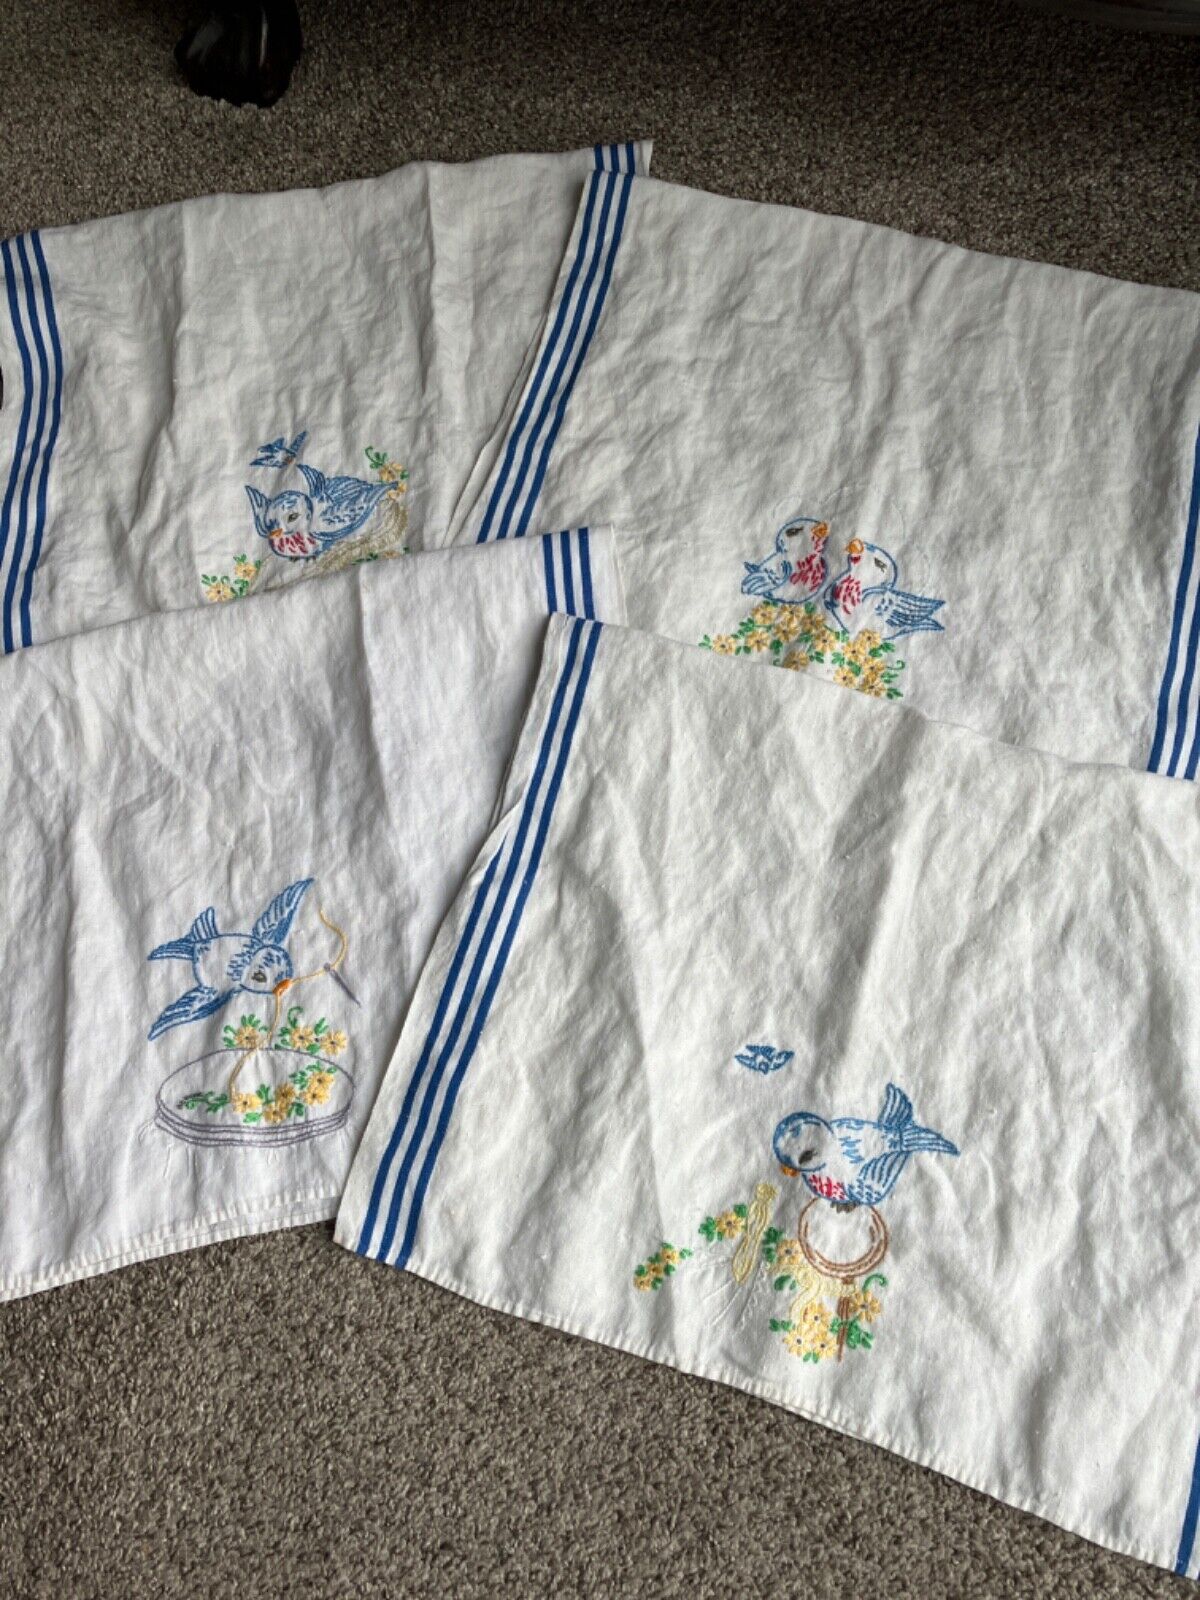 Lot of 4 white Linen Blue Stripe Embroidered Bird Tea Towels Dish Towel Vintage?